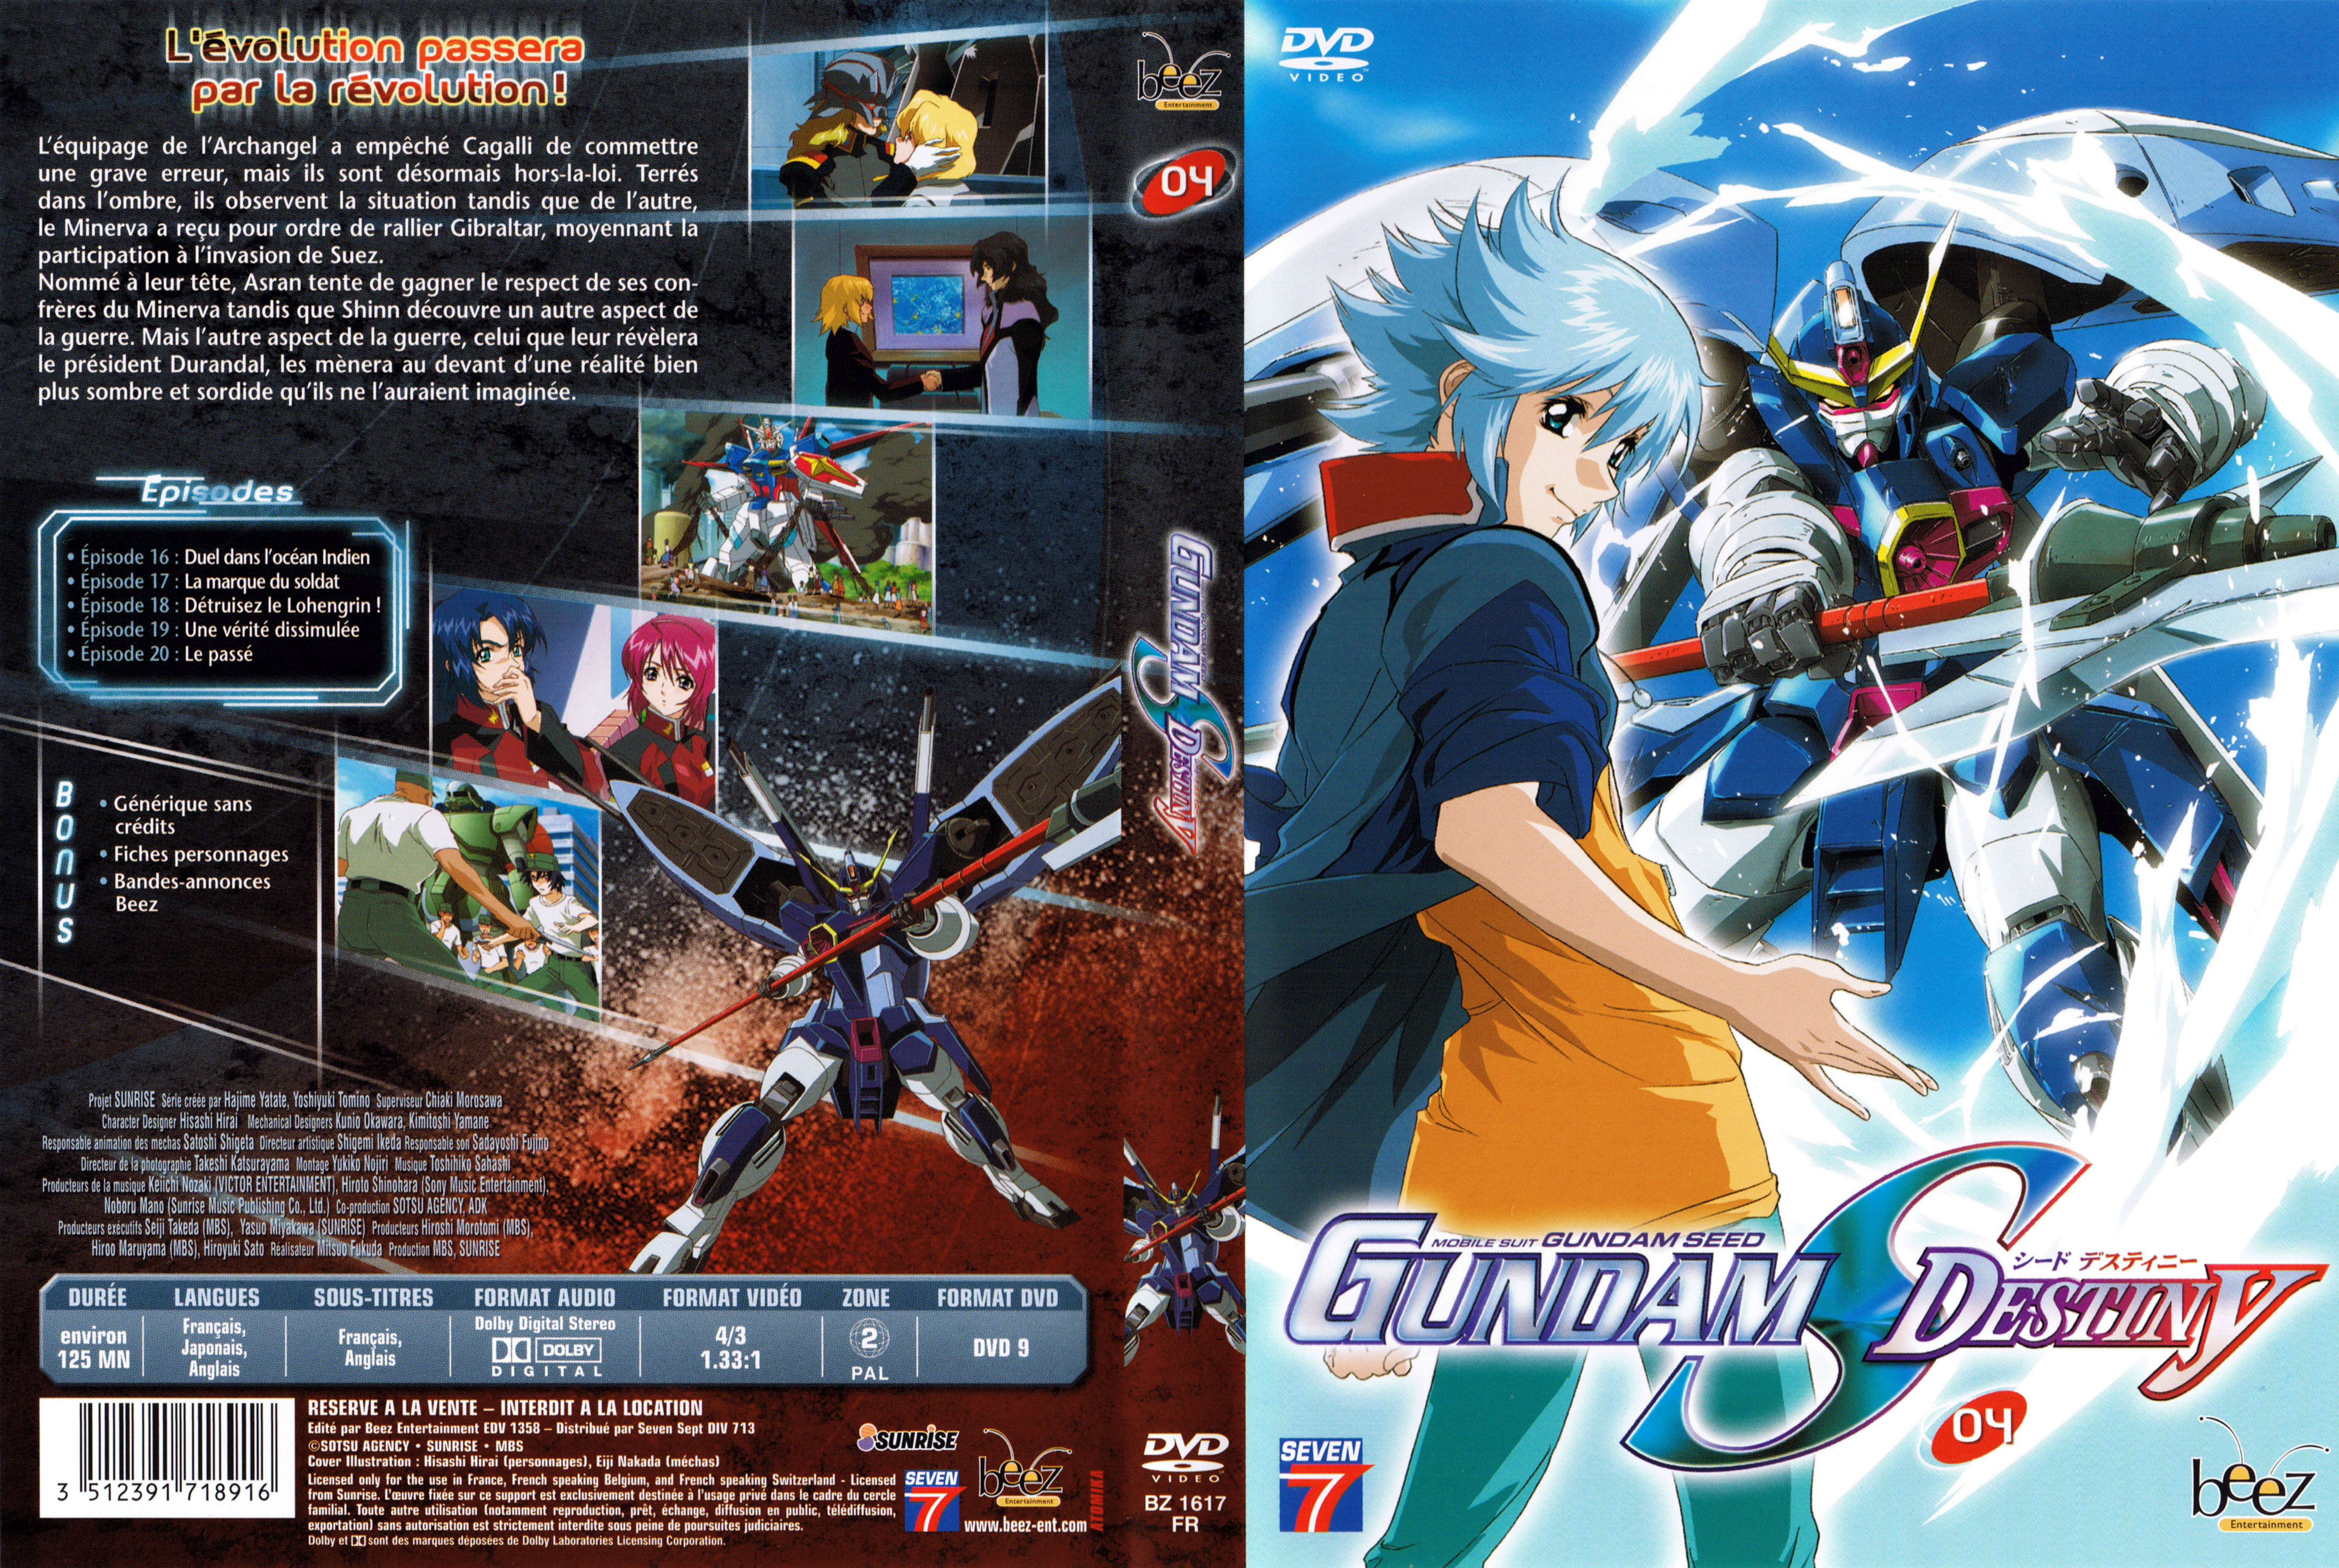 Jaquette DVD Gundam destiny vol 04